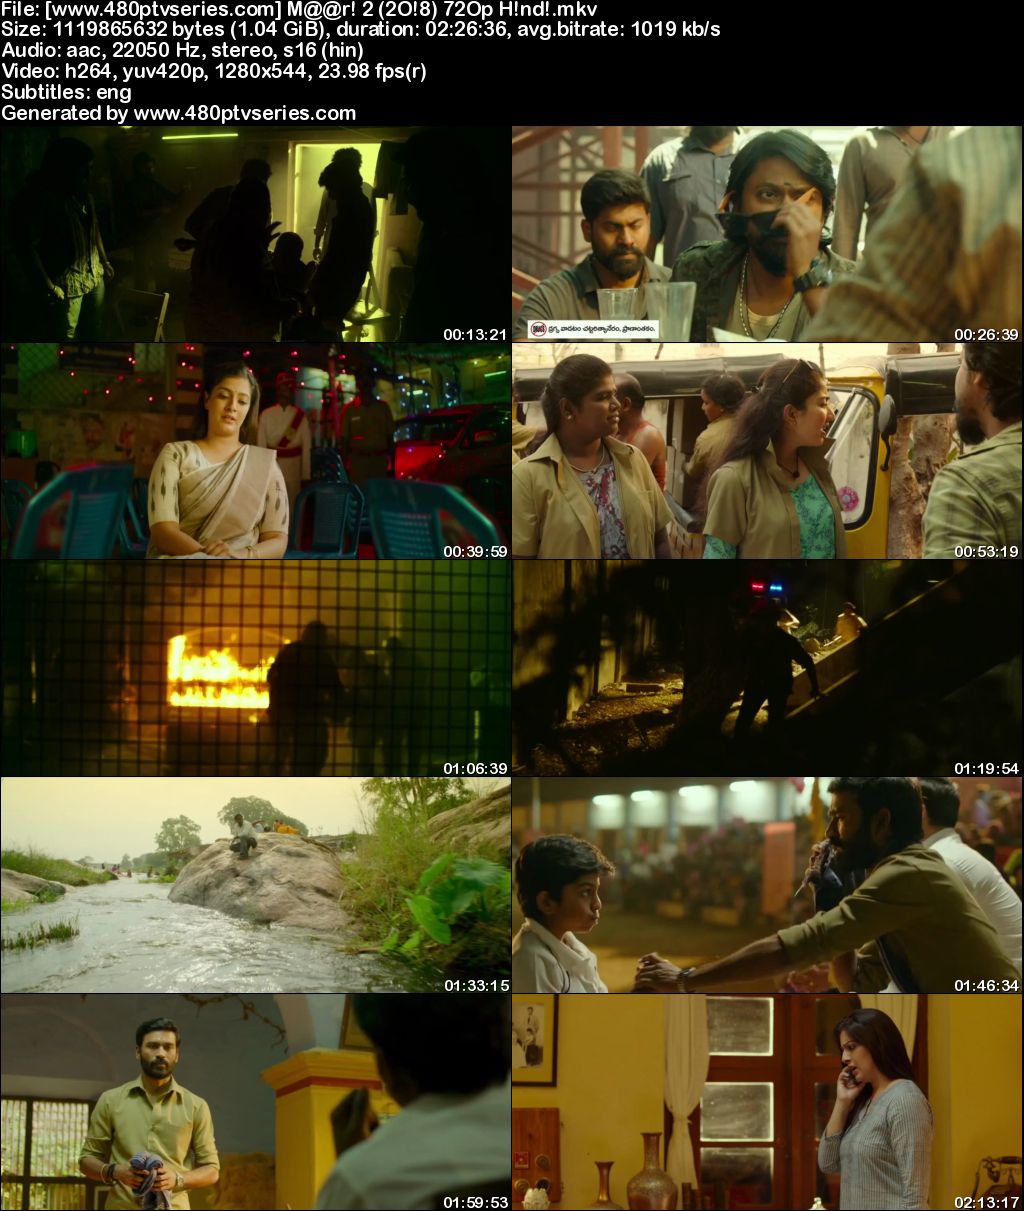 Watch Online Free Maari 2 (2019) Full Hindi Dubbed Movie Download 480p 720p HDRip